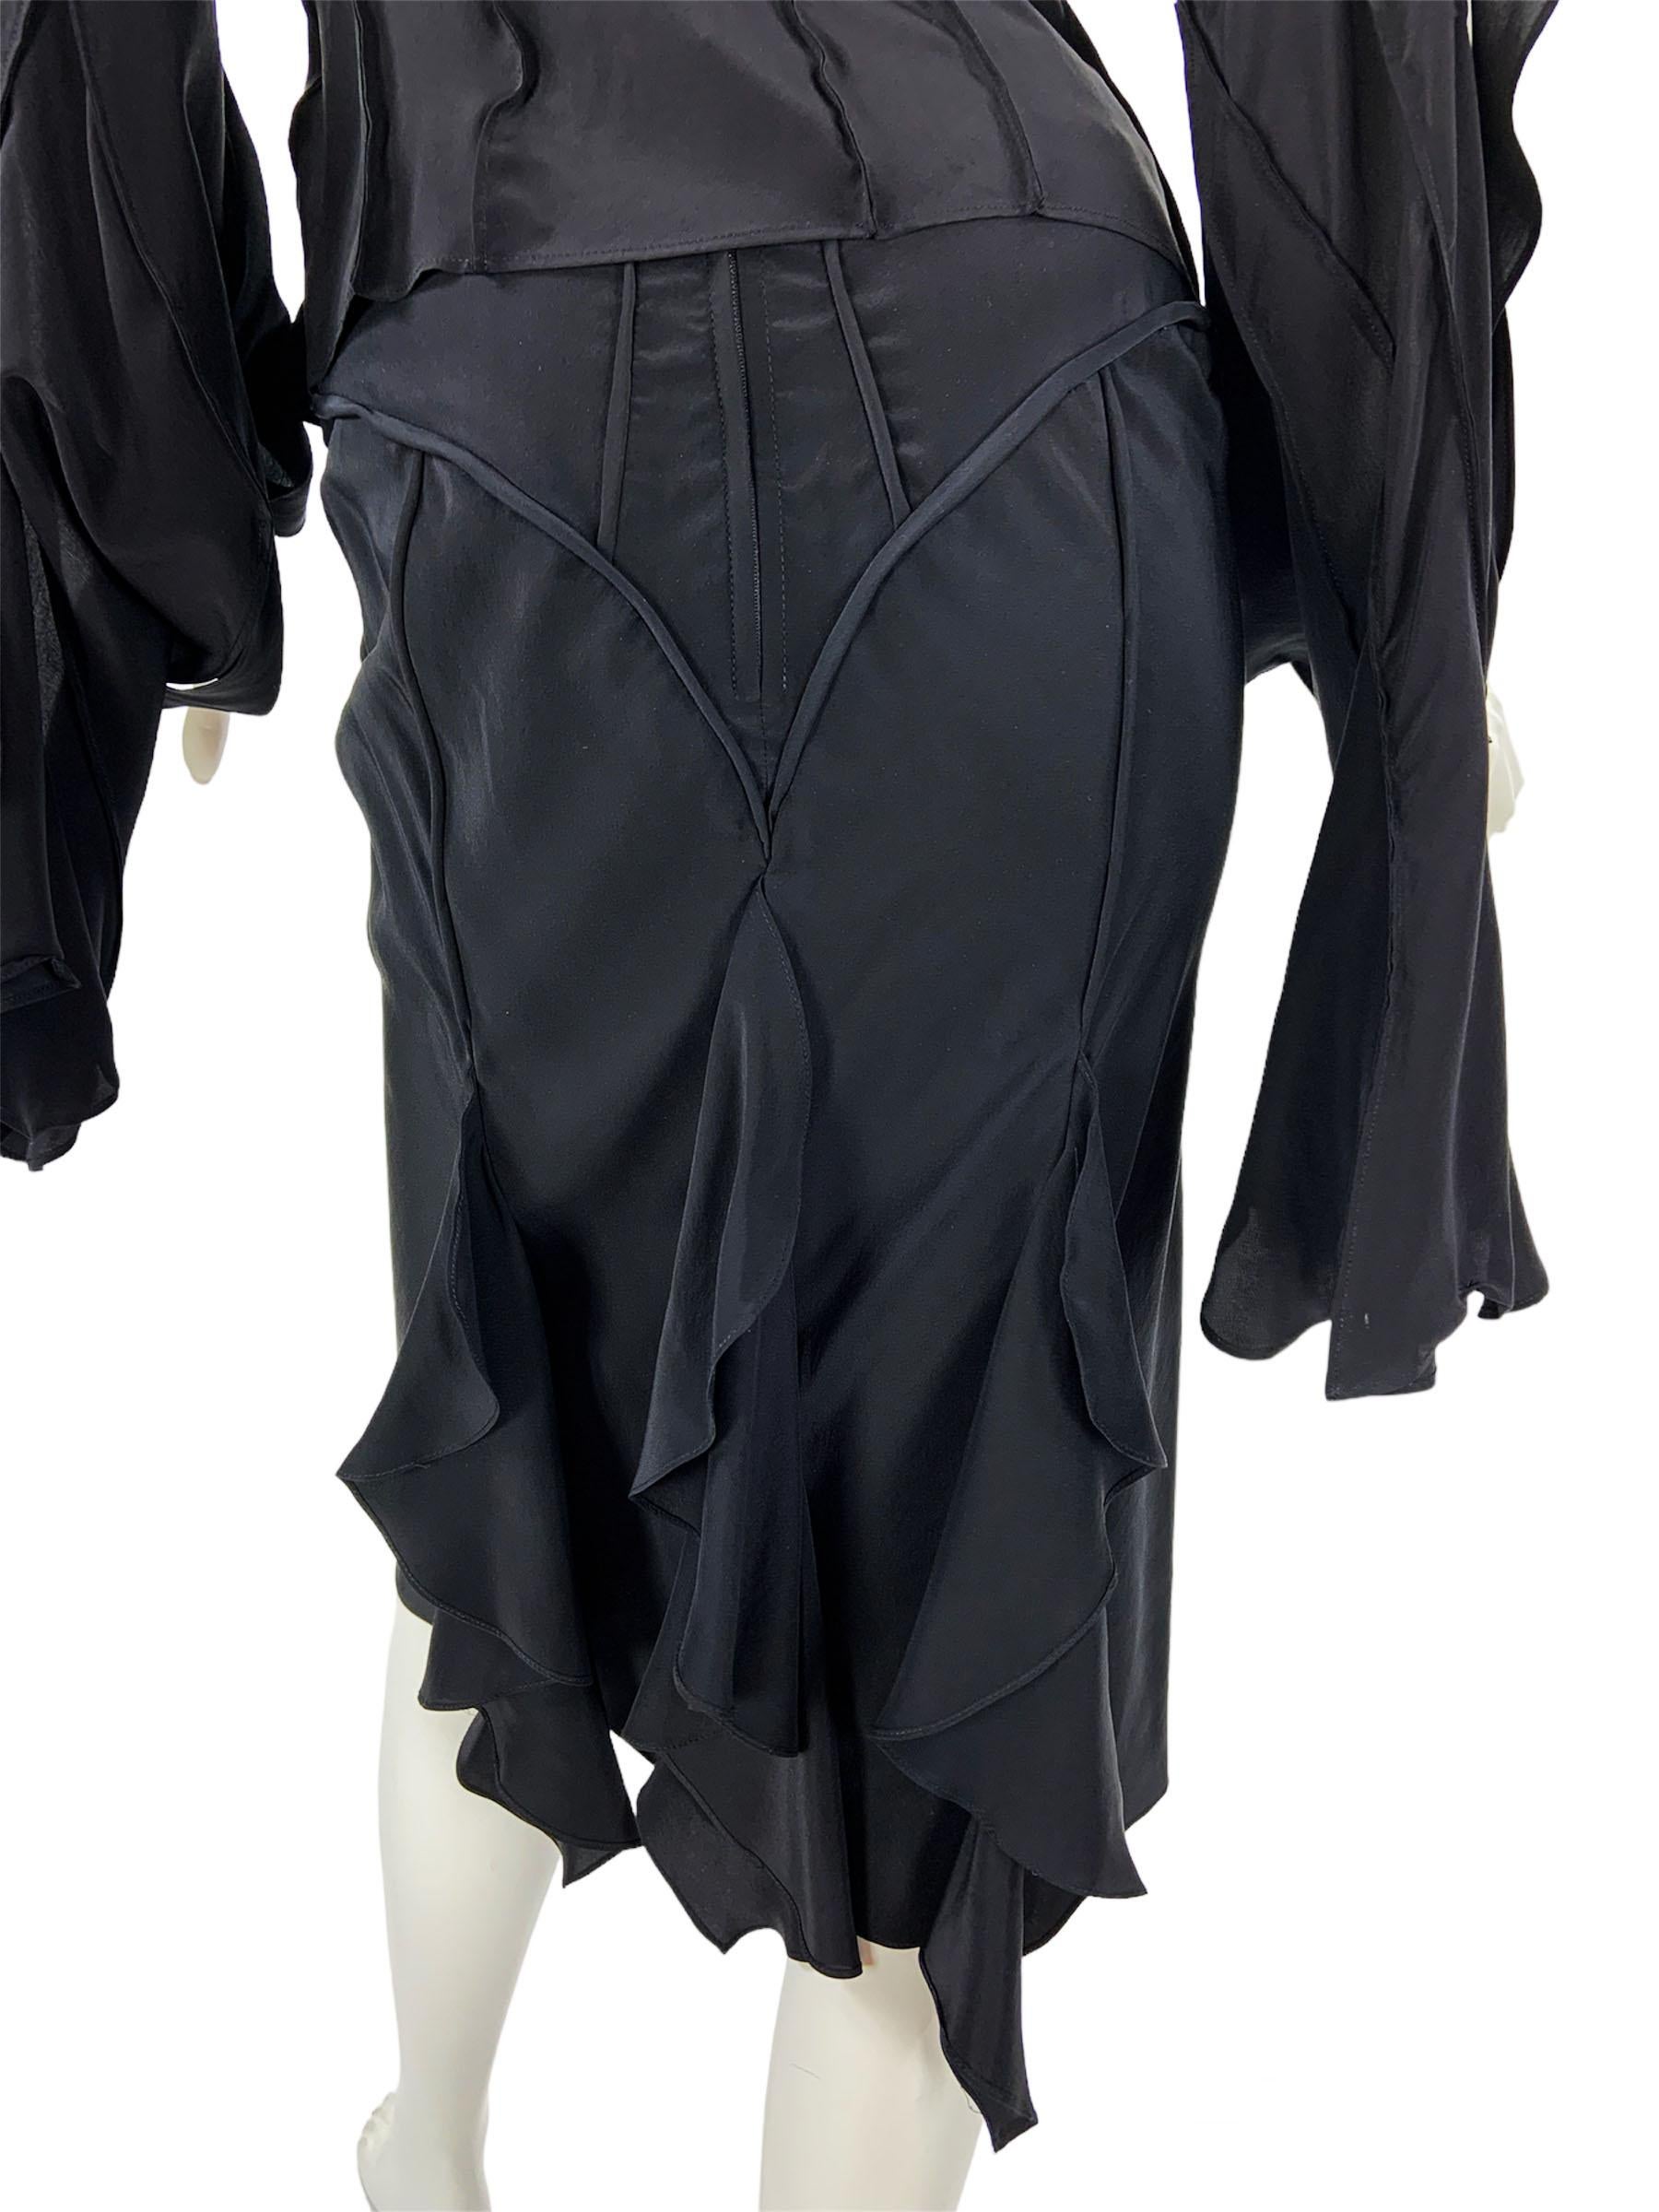 Tom Ford for Yves Saint Laurent S/S 2003 Silk Black Skirt Suit French 38 - US 6 For Sale 7